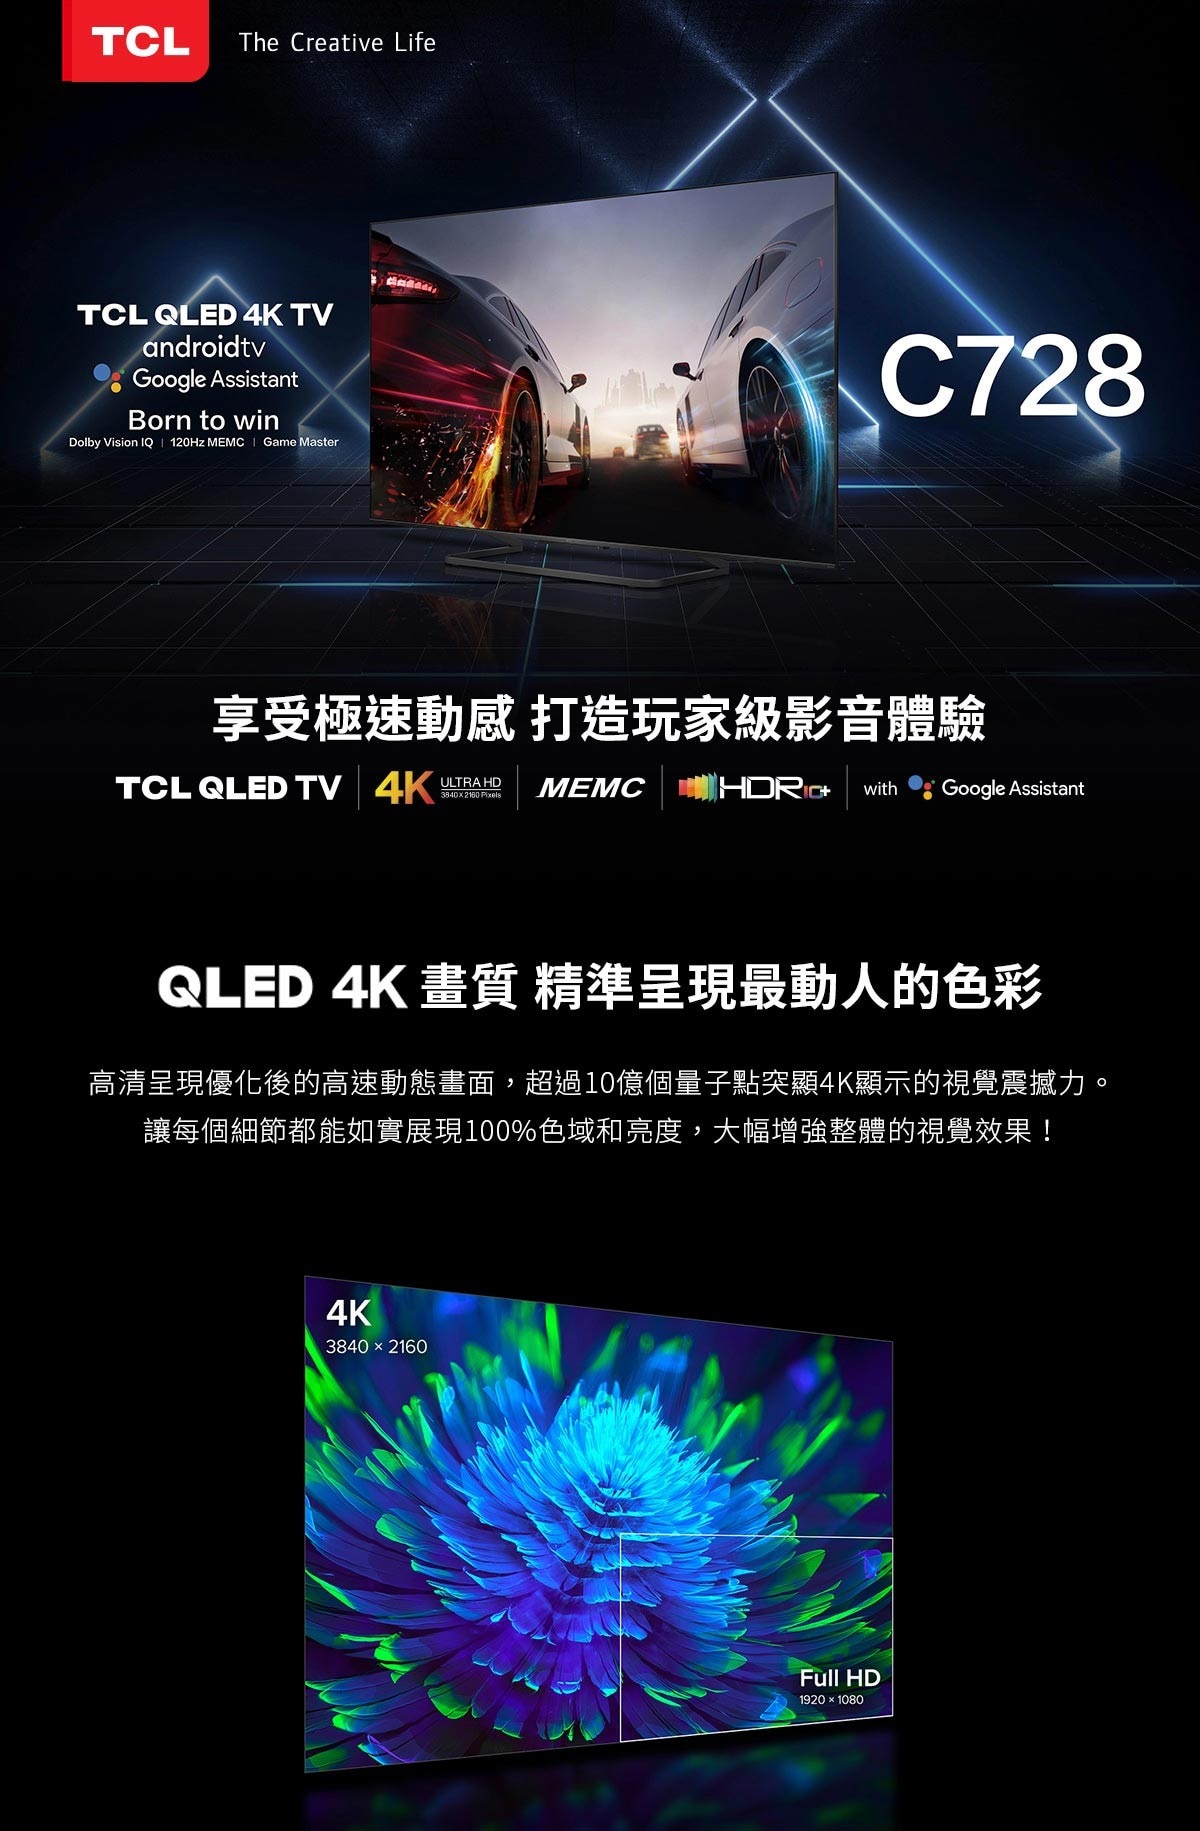 TCL 4K 55吋 QLED量子智能聯網顯示器 C728，精準呈現最動人的色彩，支援 120Hz MEMC，搭載 ONKYO Audio 系統，打造Hi-Fi絕佳音質，採用度比全景聲及dts音效系統，享受極致視聽饗宴。